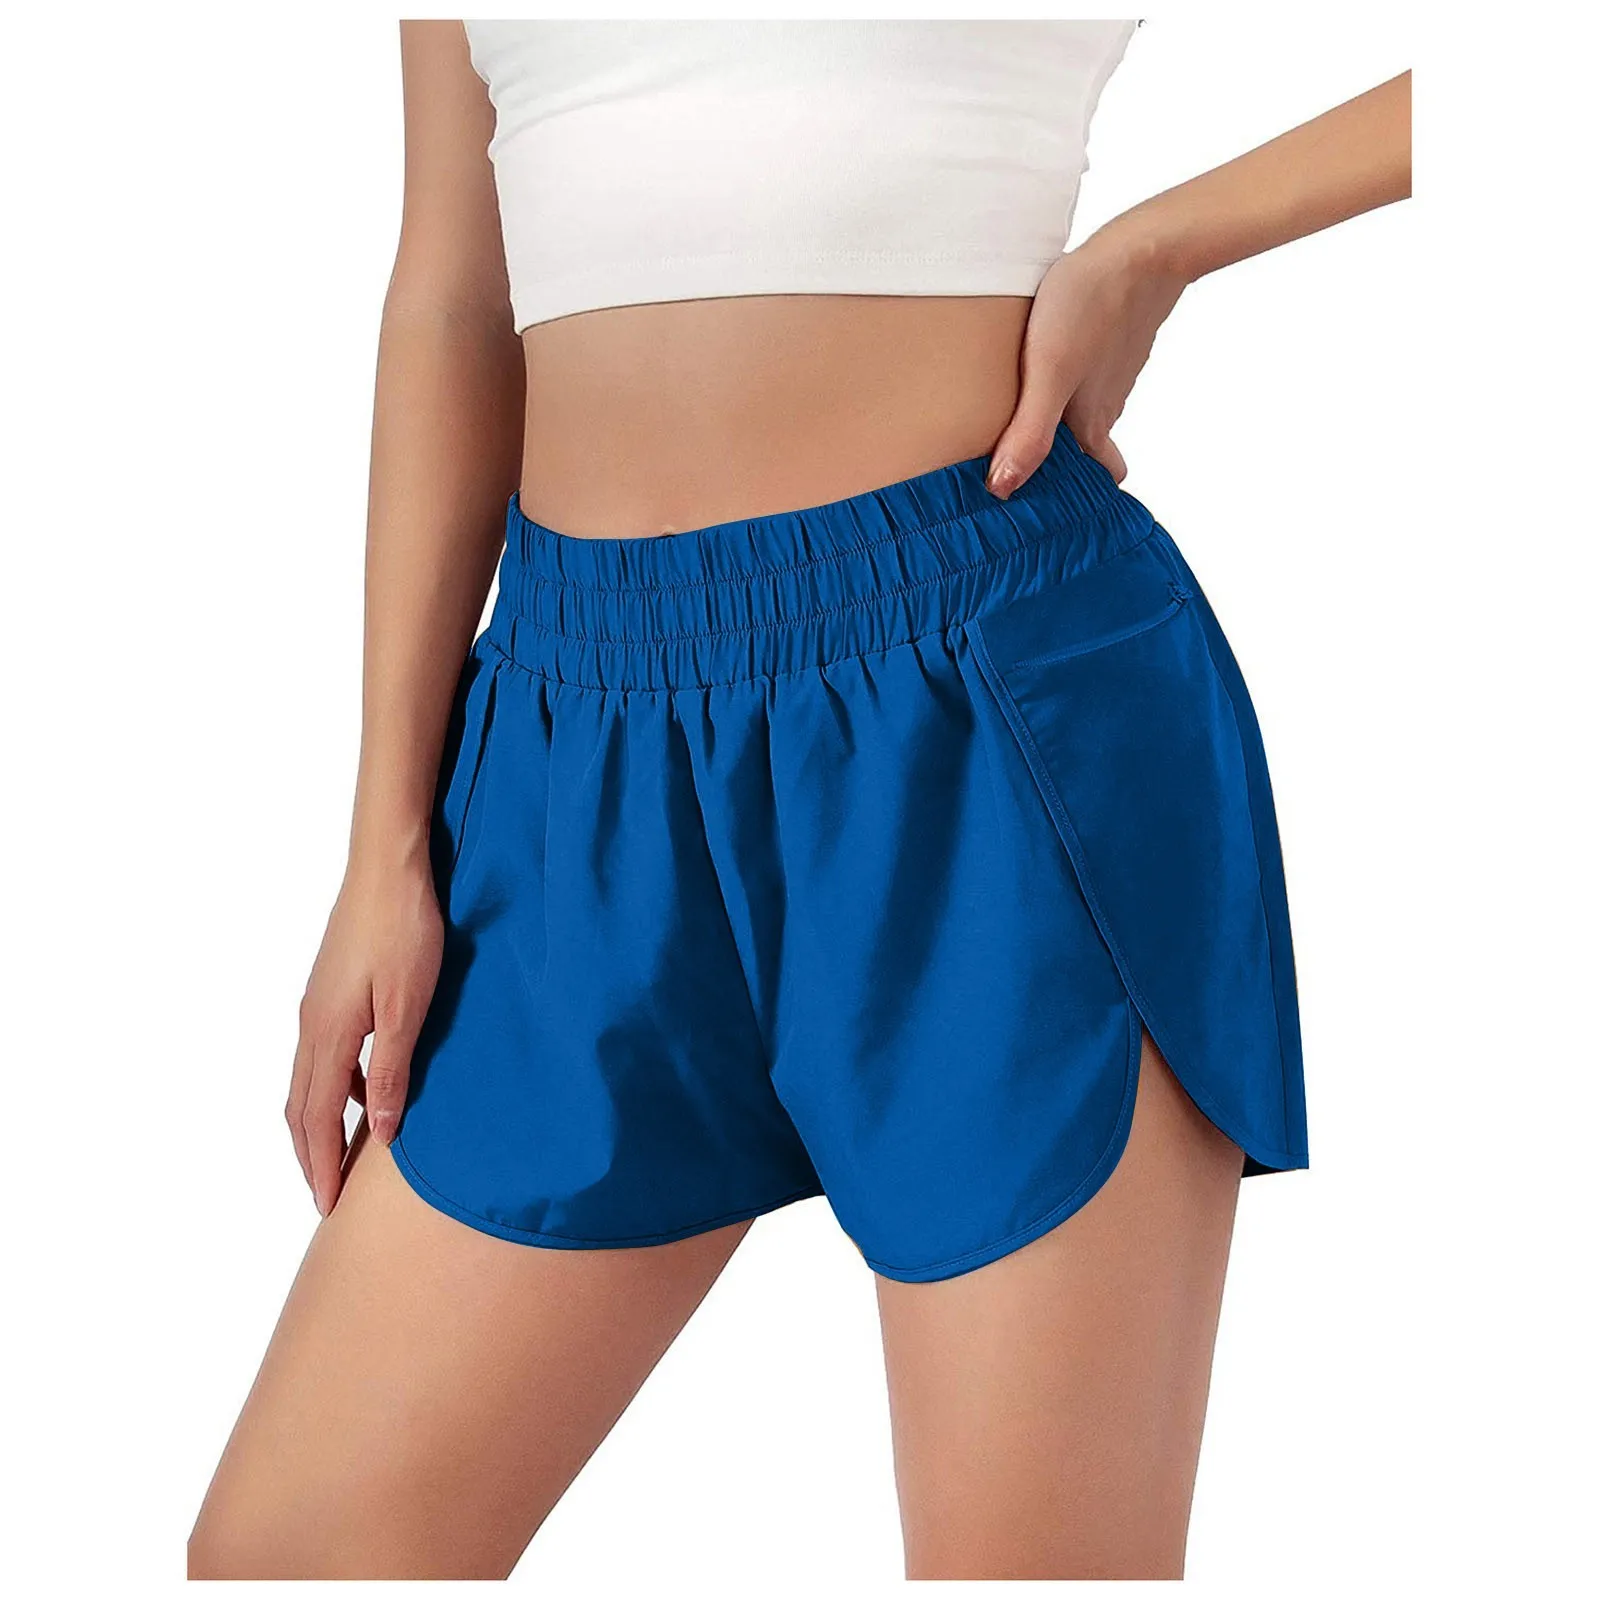 

New Short Pants For Women Fashion Solid Motion Elastic The Waist Run Quick Drying Yoga Pants Shorts Vintage Trousers Pantalones